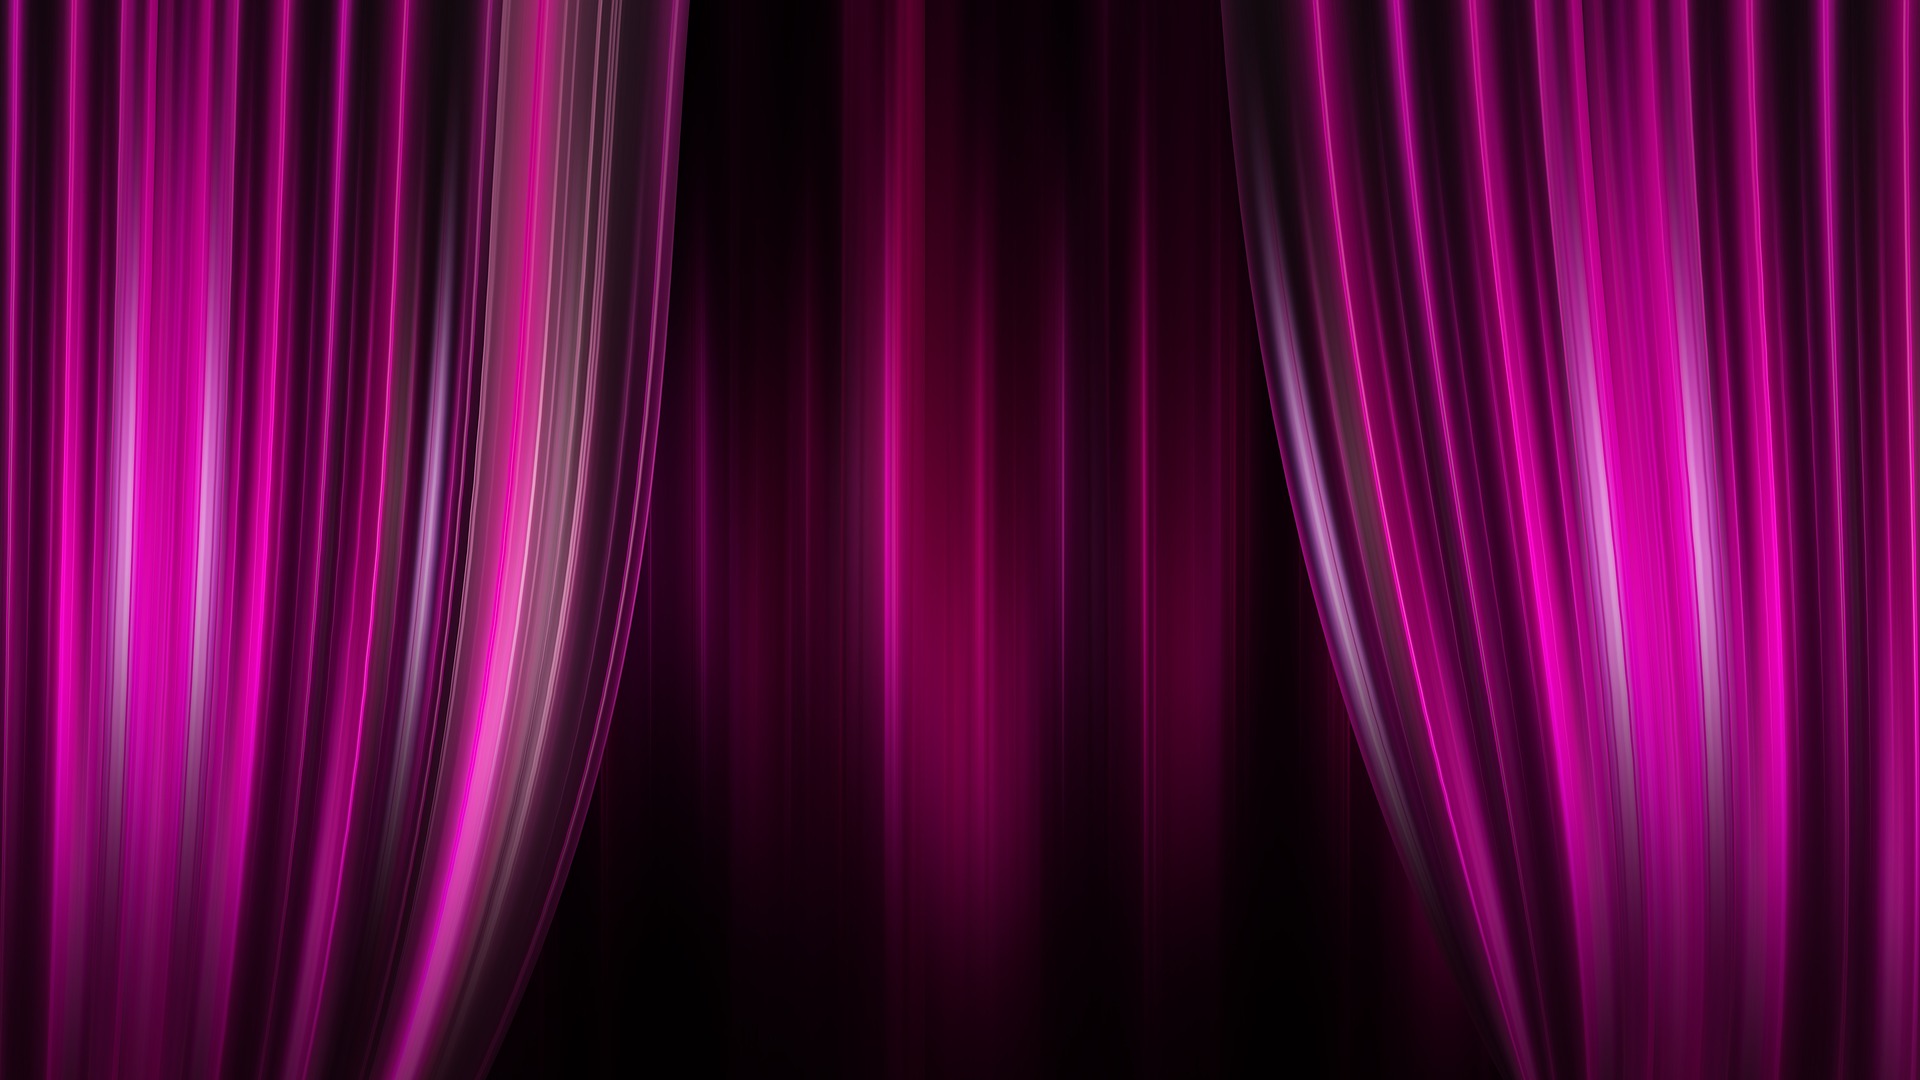 Purple curtains with dark lighting